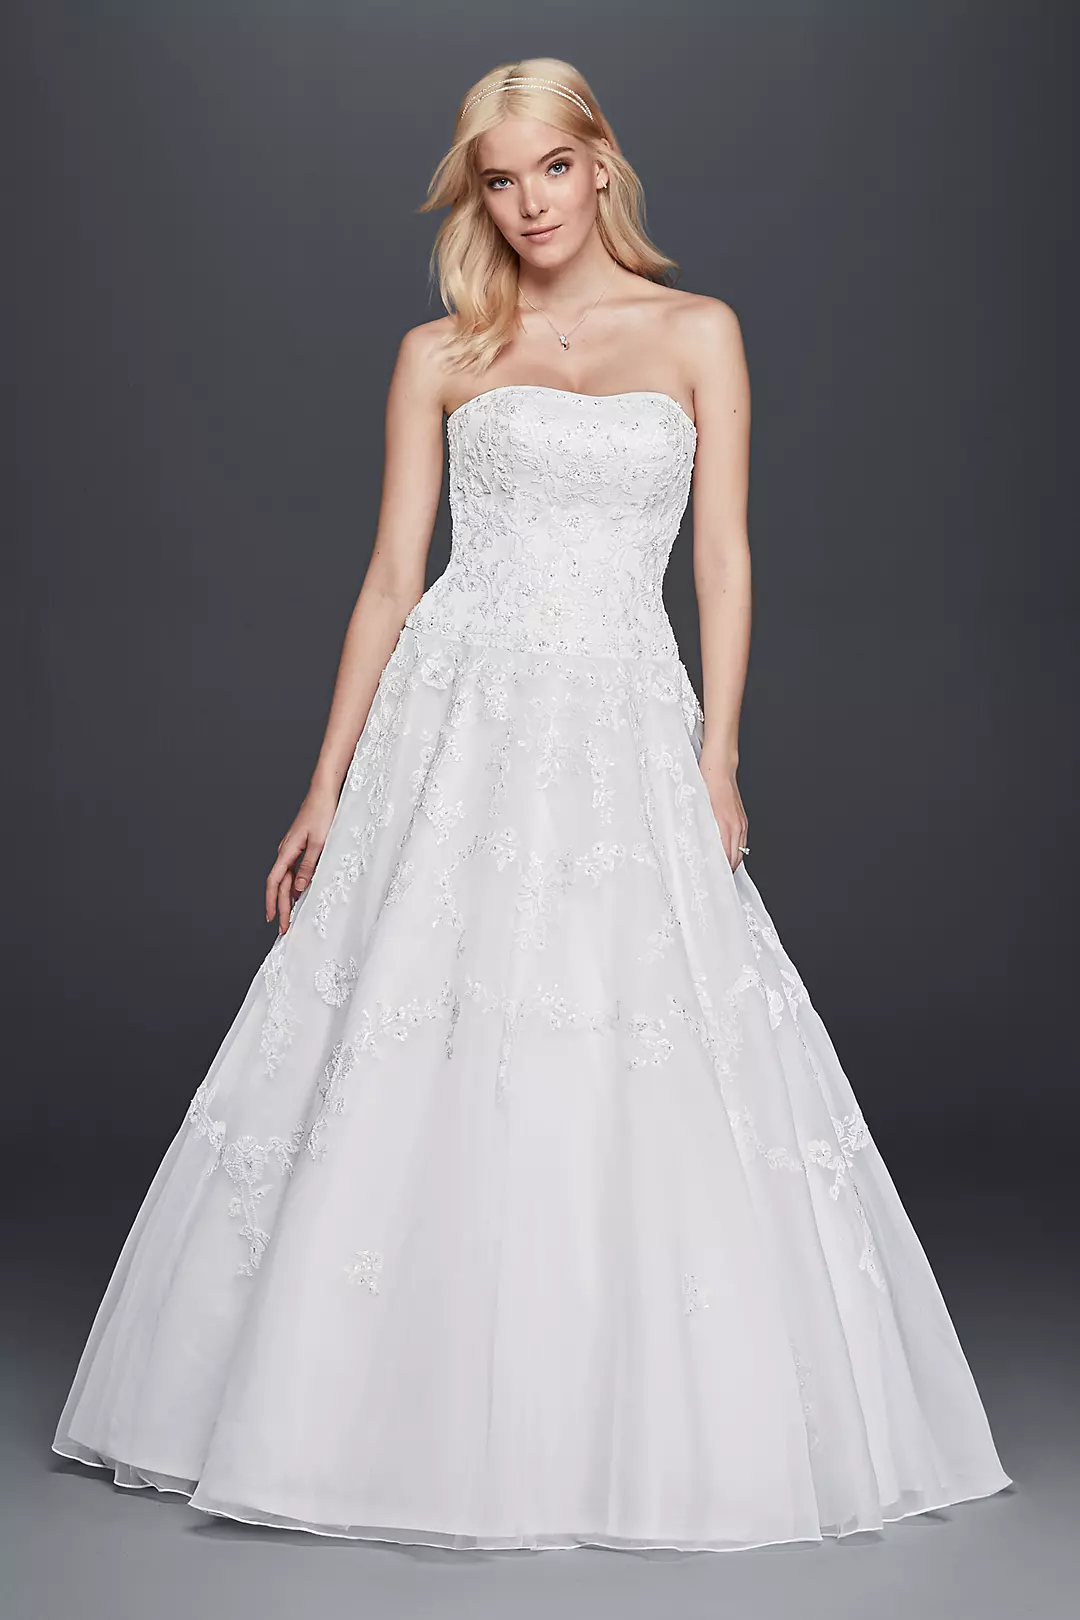 Strapless Lace Drop Waist Ball Gown Wedding Dress Image